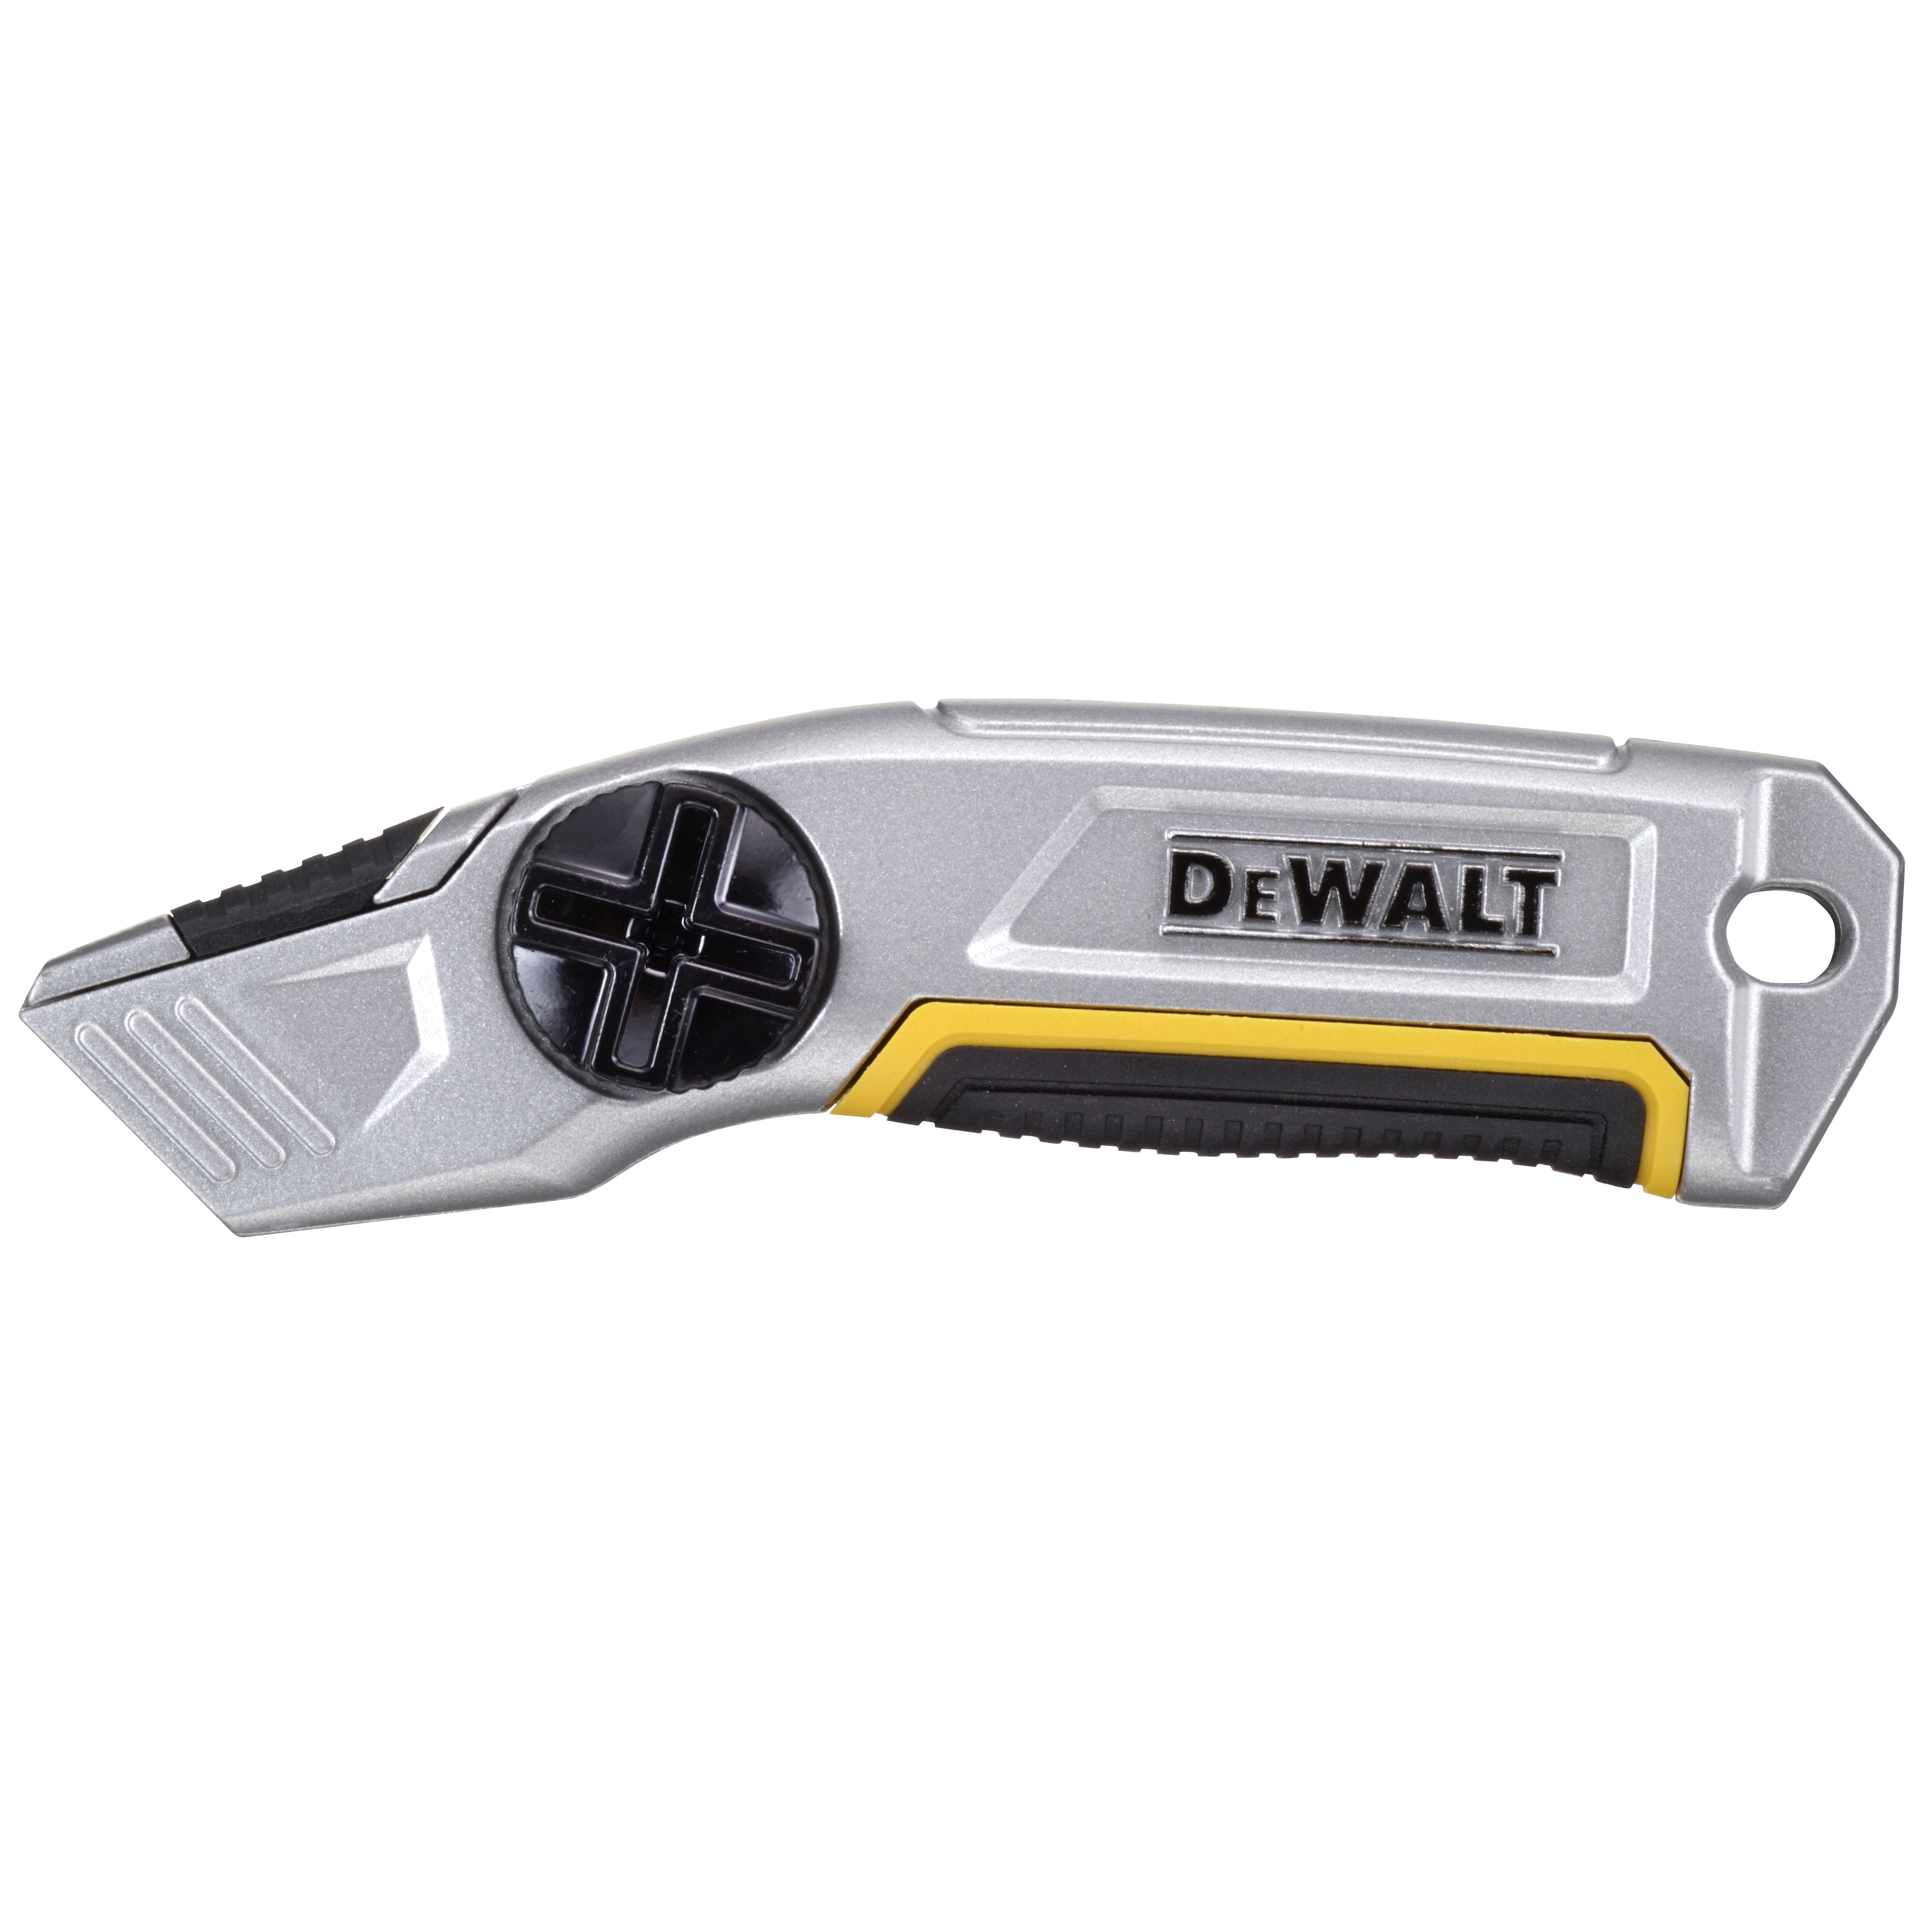 DeWalt Carbon steel 25mm Fixed knife